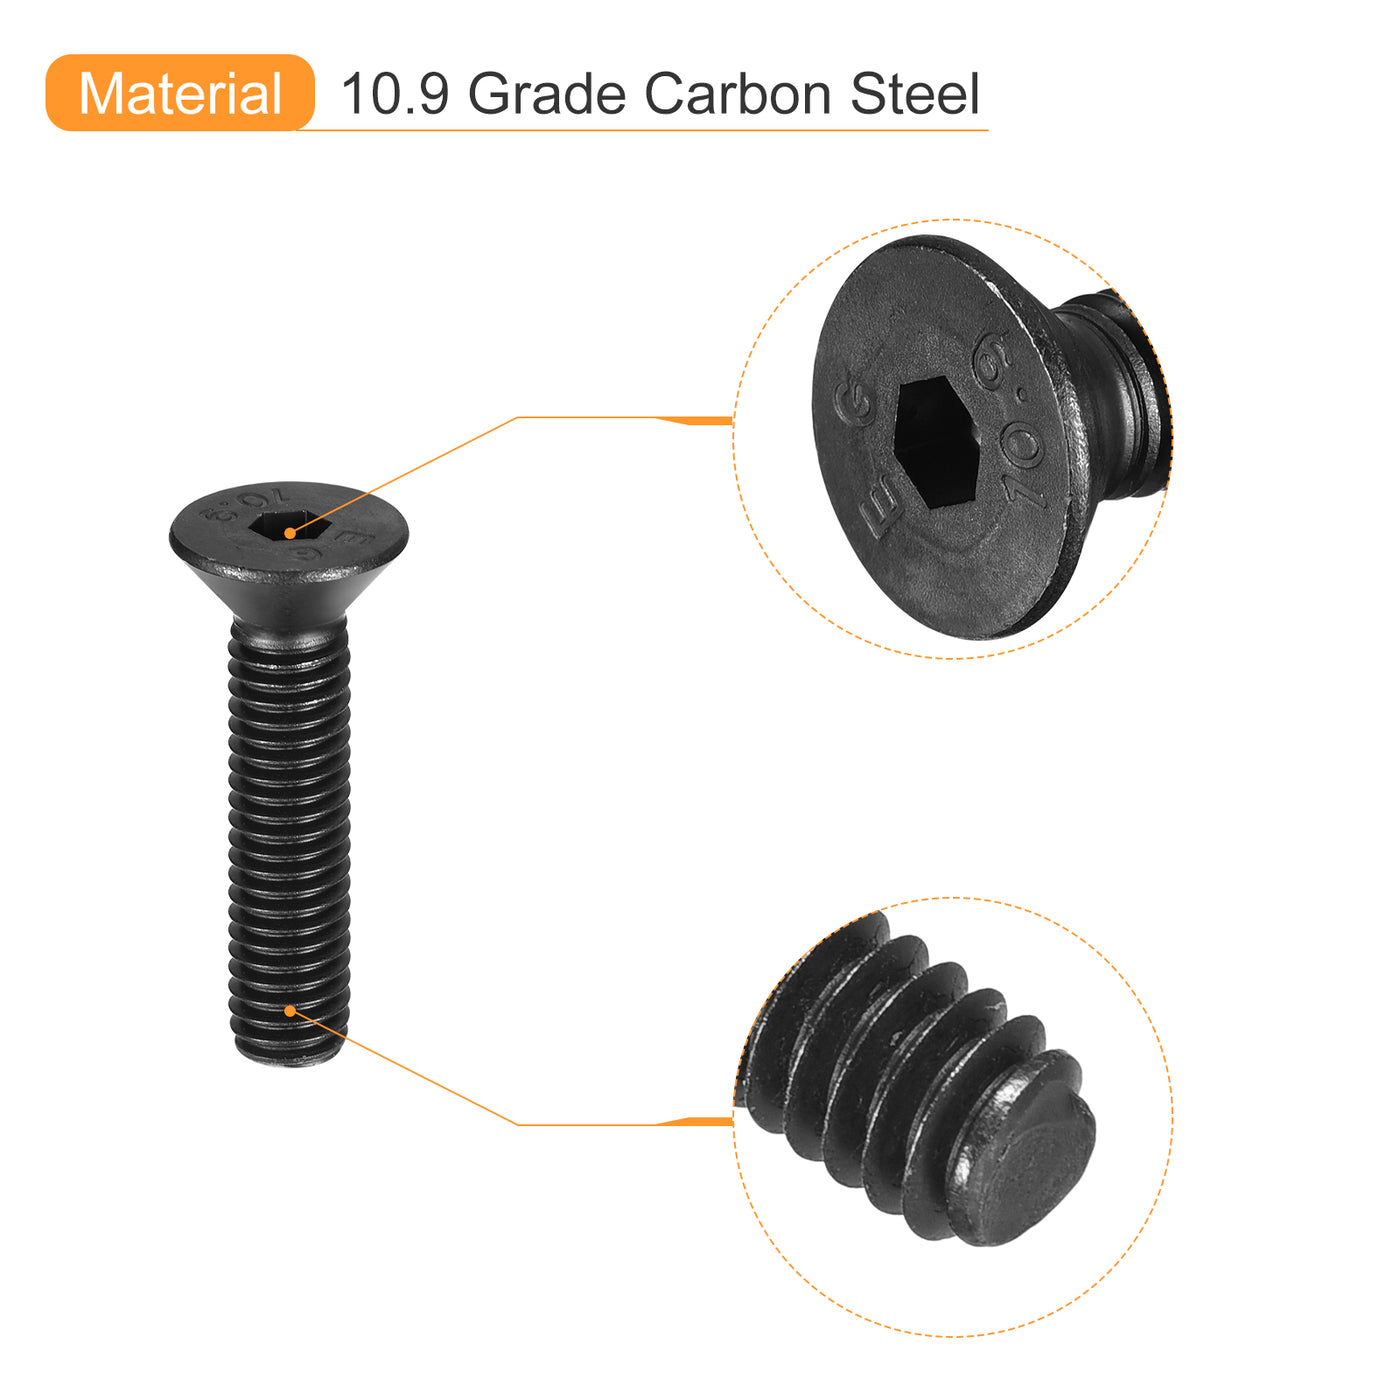 uxcell Uxcell 3/8-16x1-3/4" Flat Head Socket Cap Screws, 10.9 Grade Carbon Steel, 20PCS